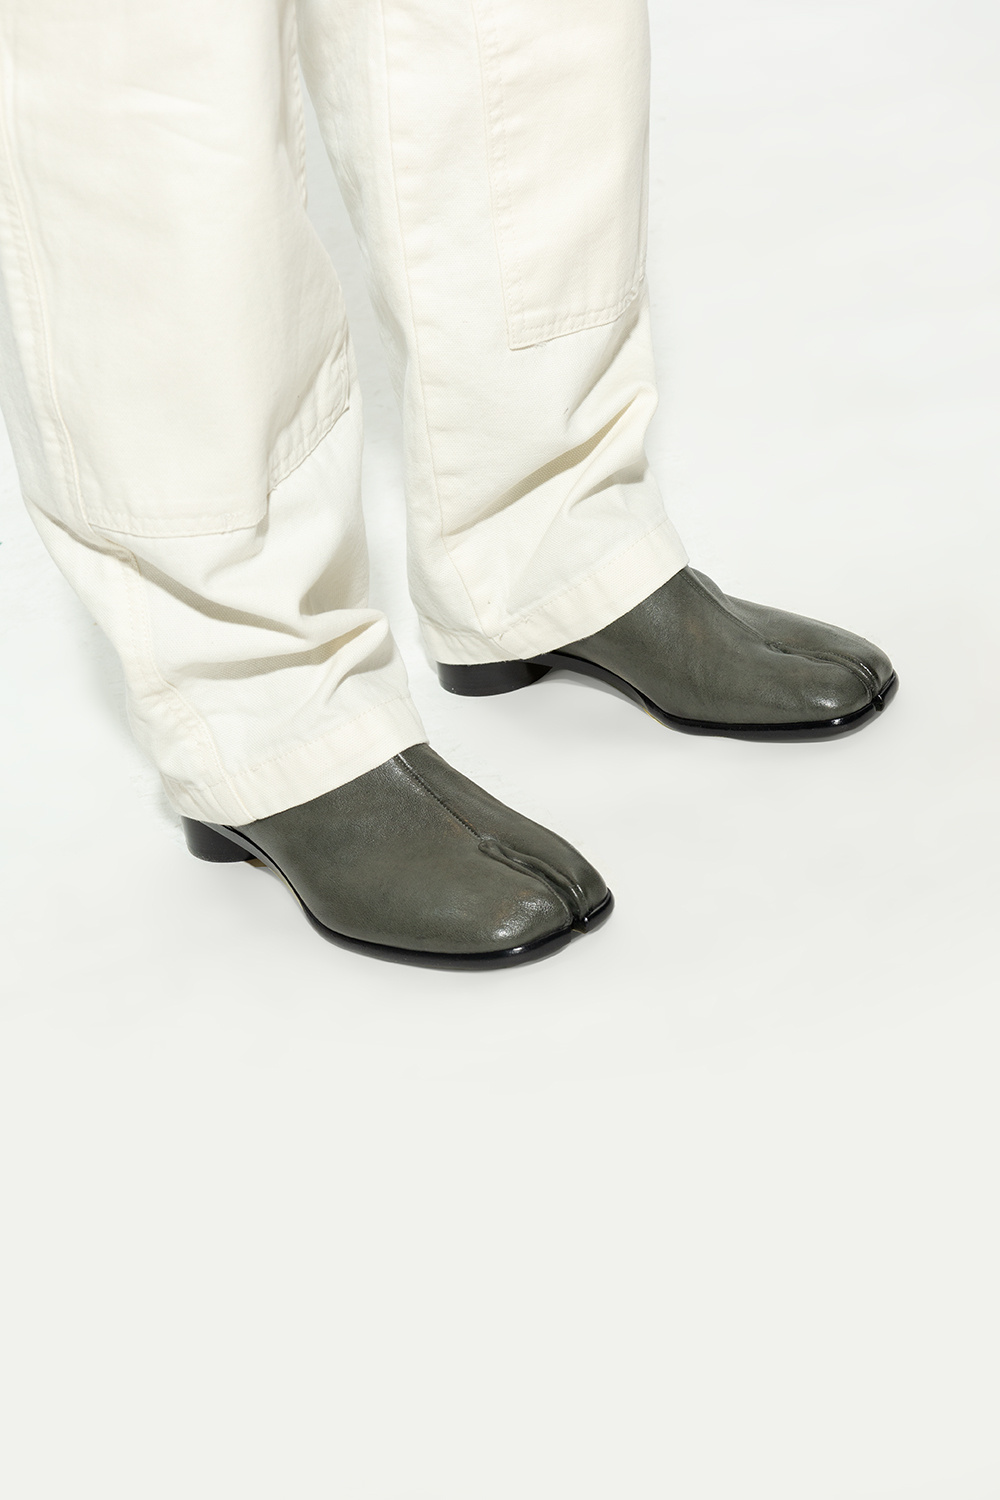 Green 'Tabi' leather ankle boots Maison Margiela - Vitkac Canada